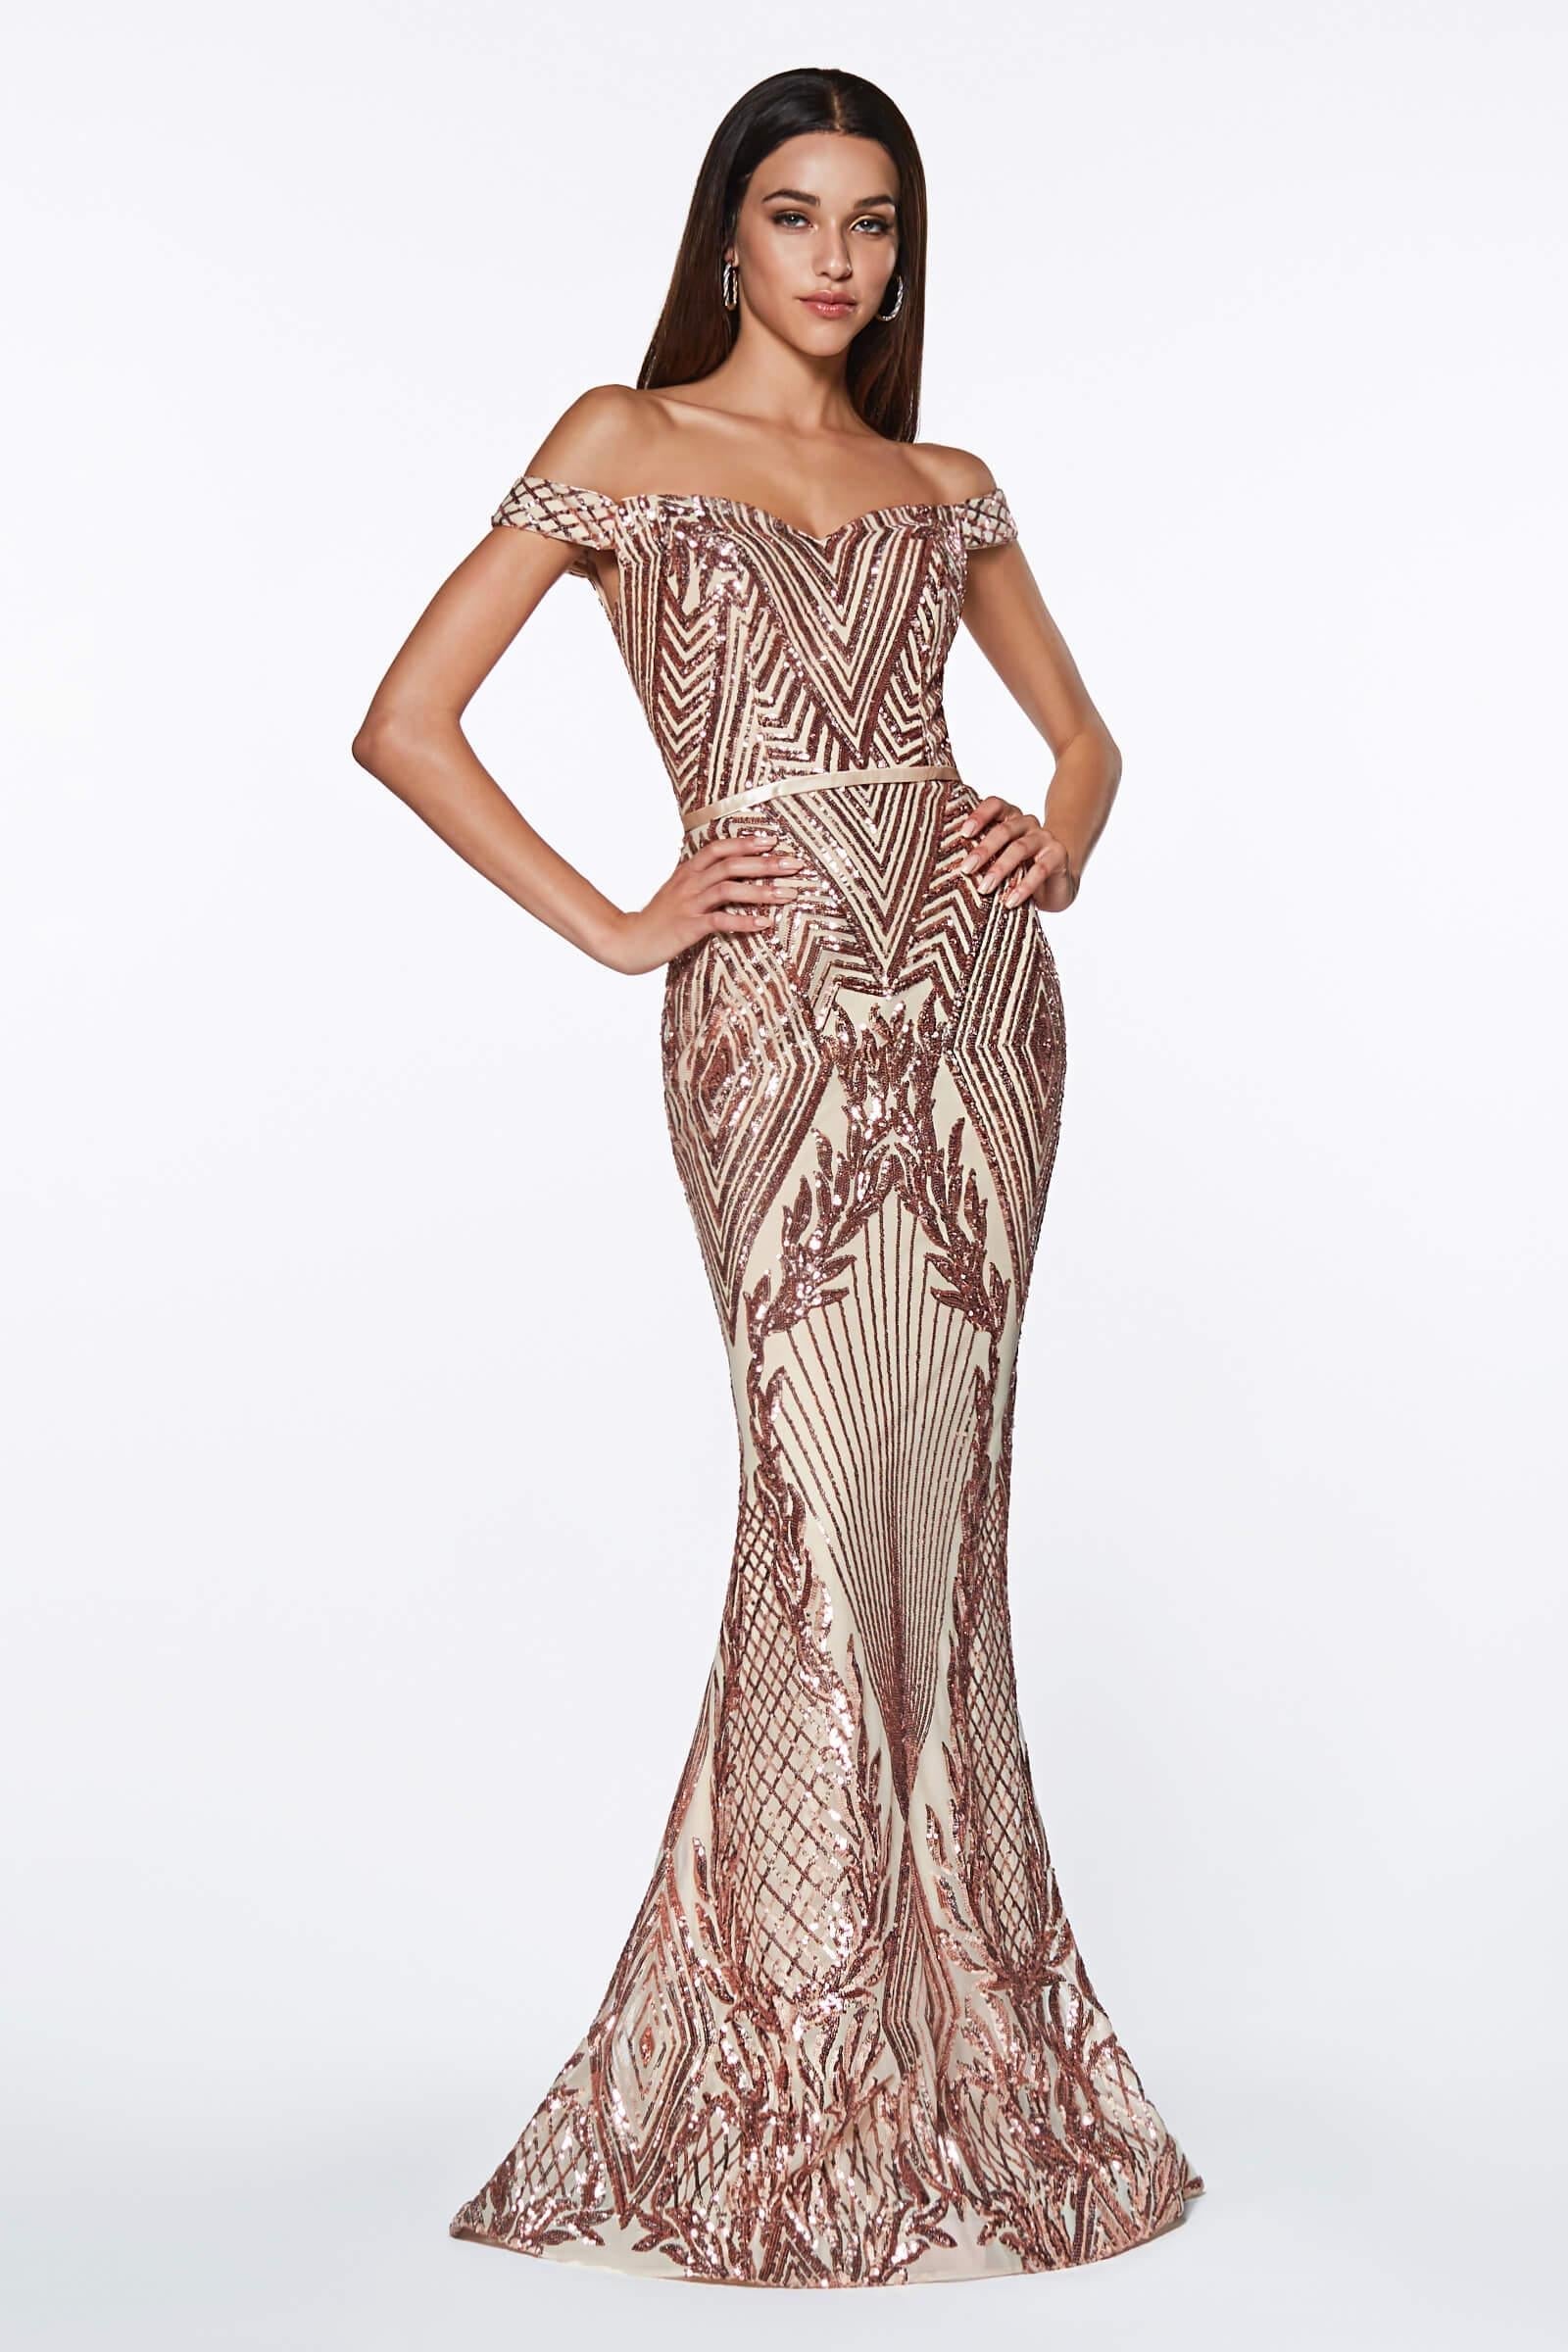 Long Sequin Off The Shoulder Prom Gown Evening Dress - The Dress Outlet Cinderella Divine